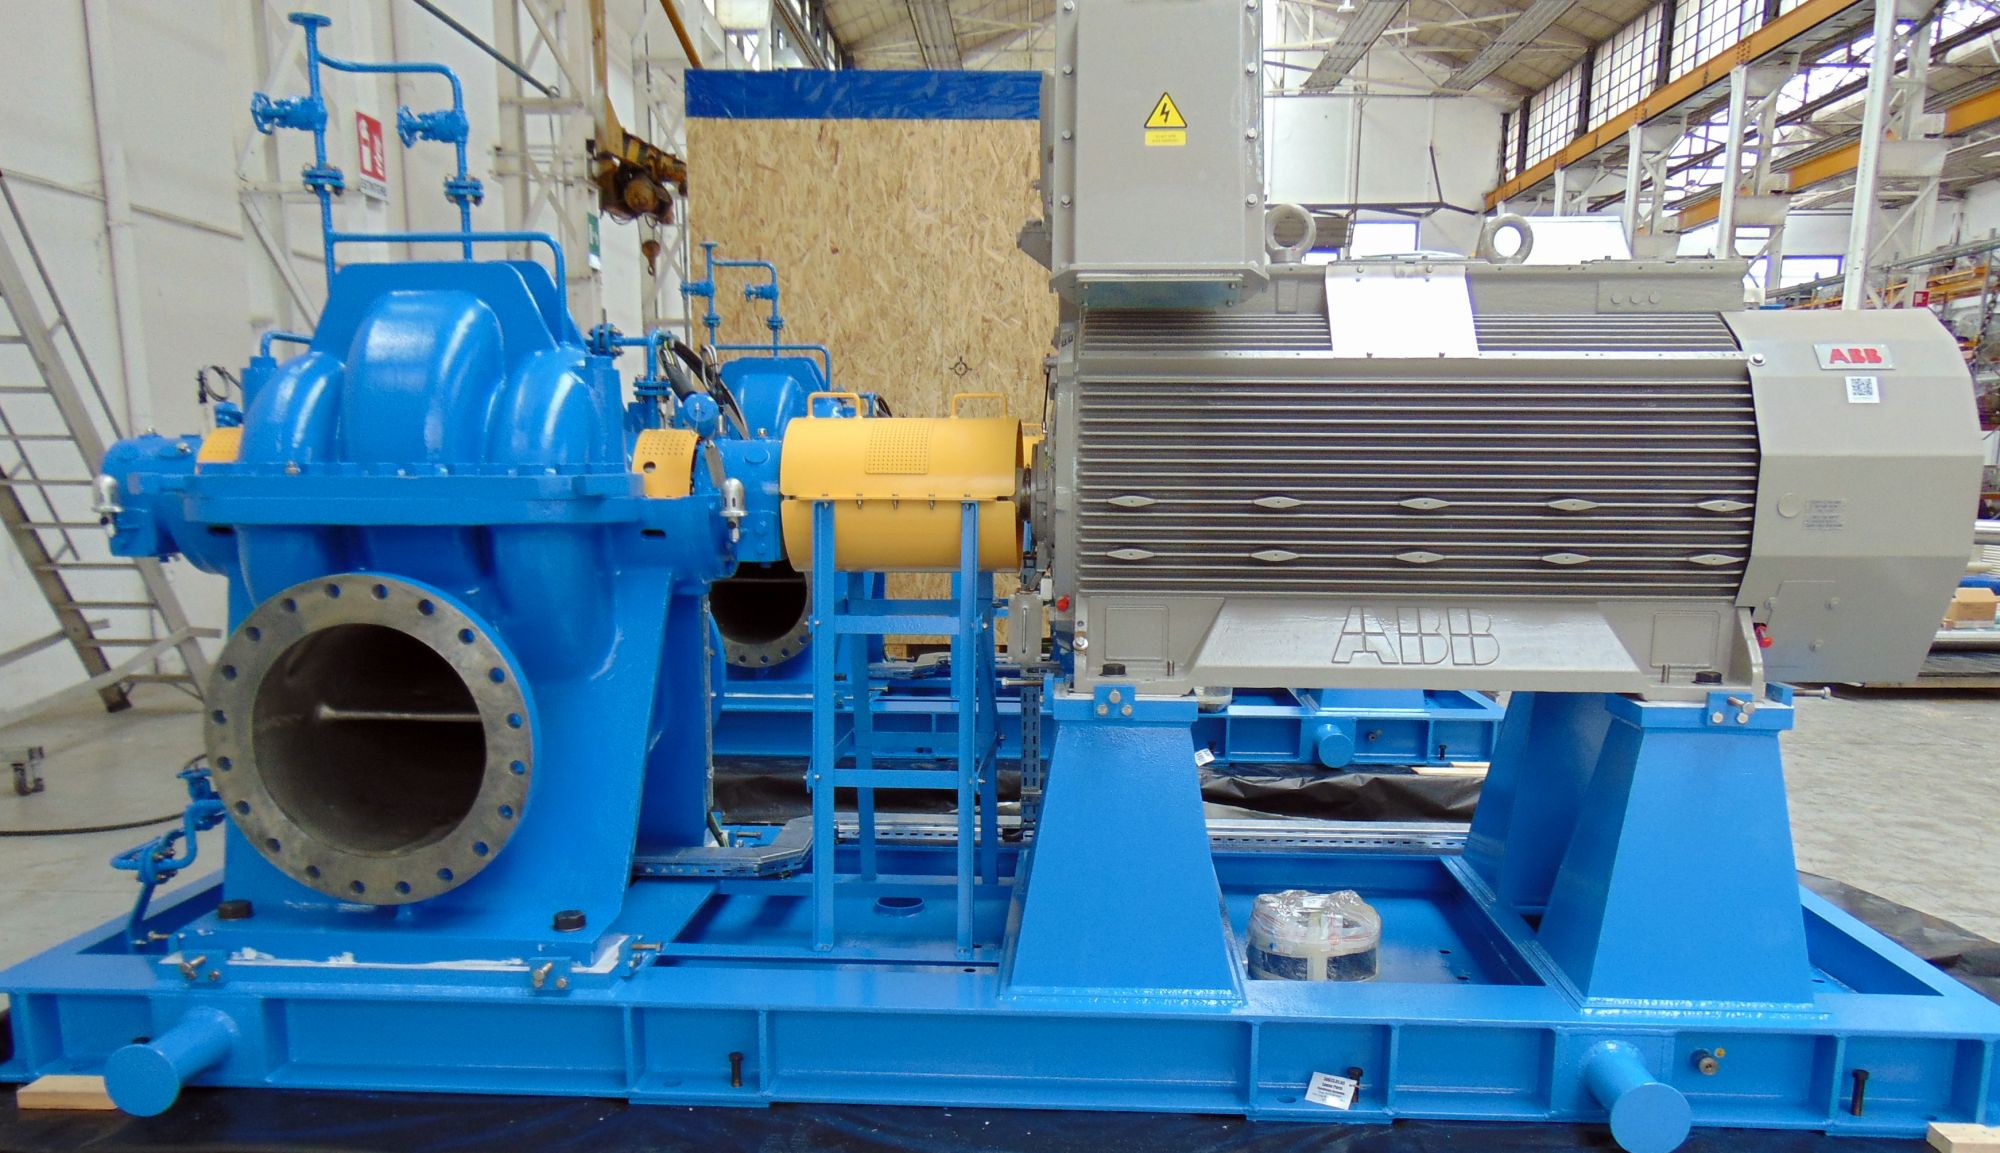 IMAGE 2: Horizontal pump for water distribution at RO desalination plant